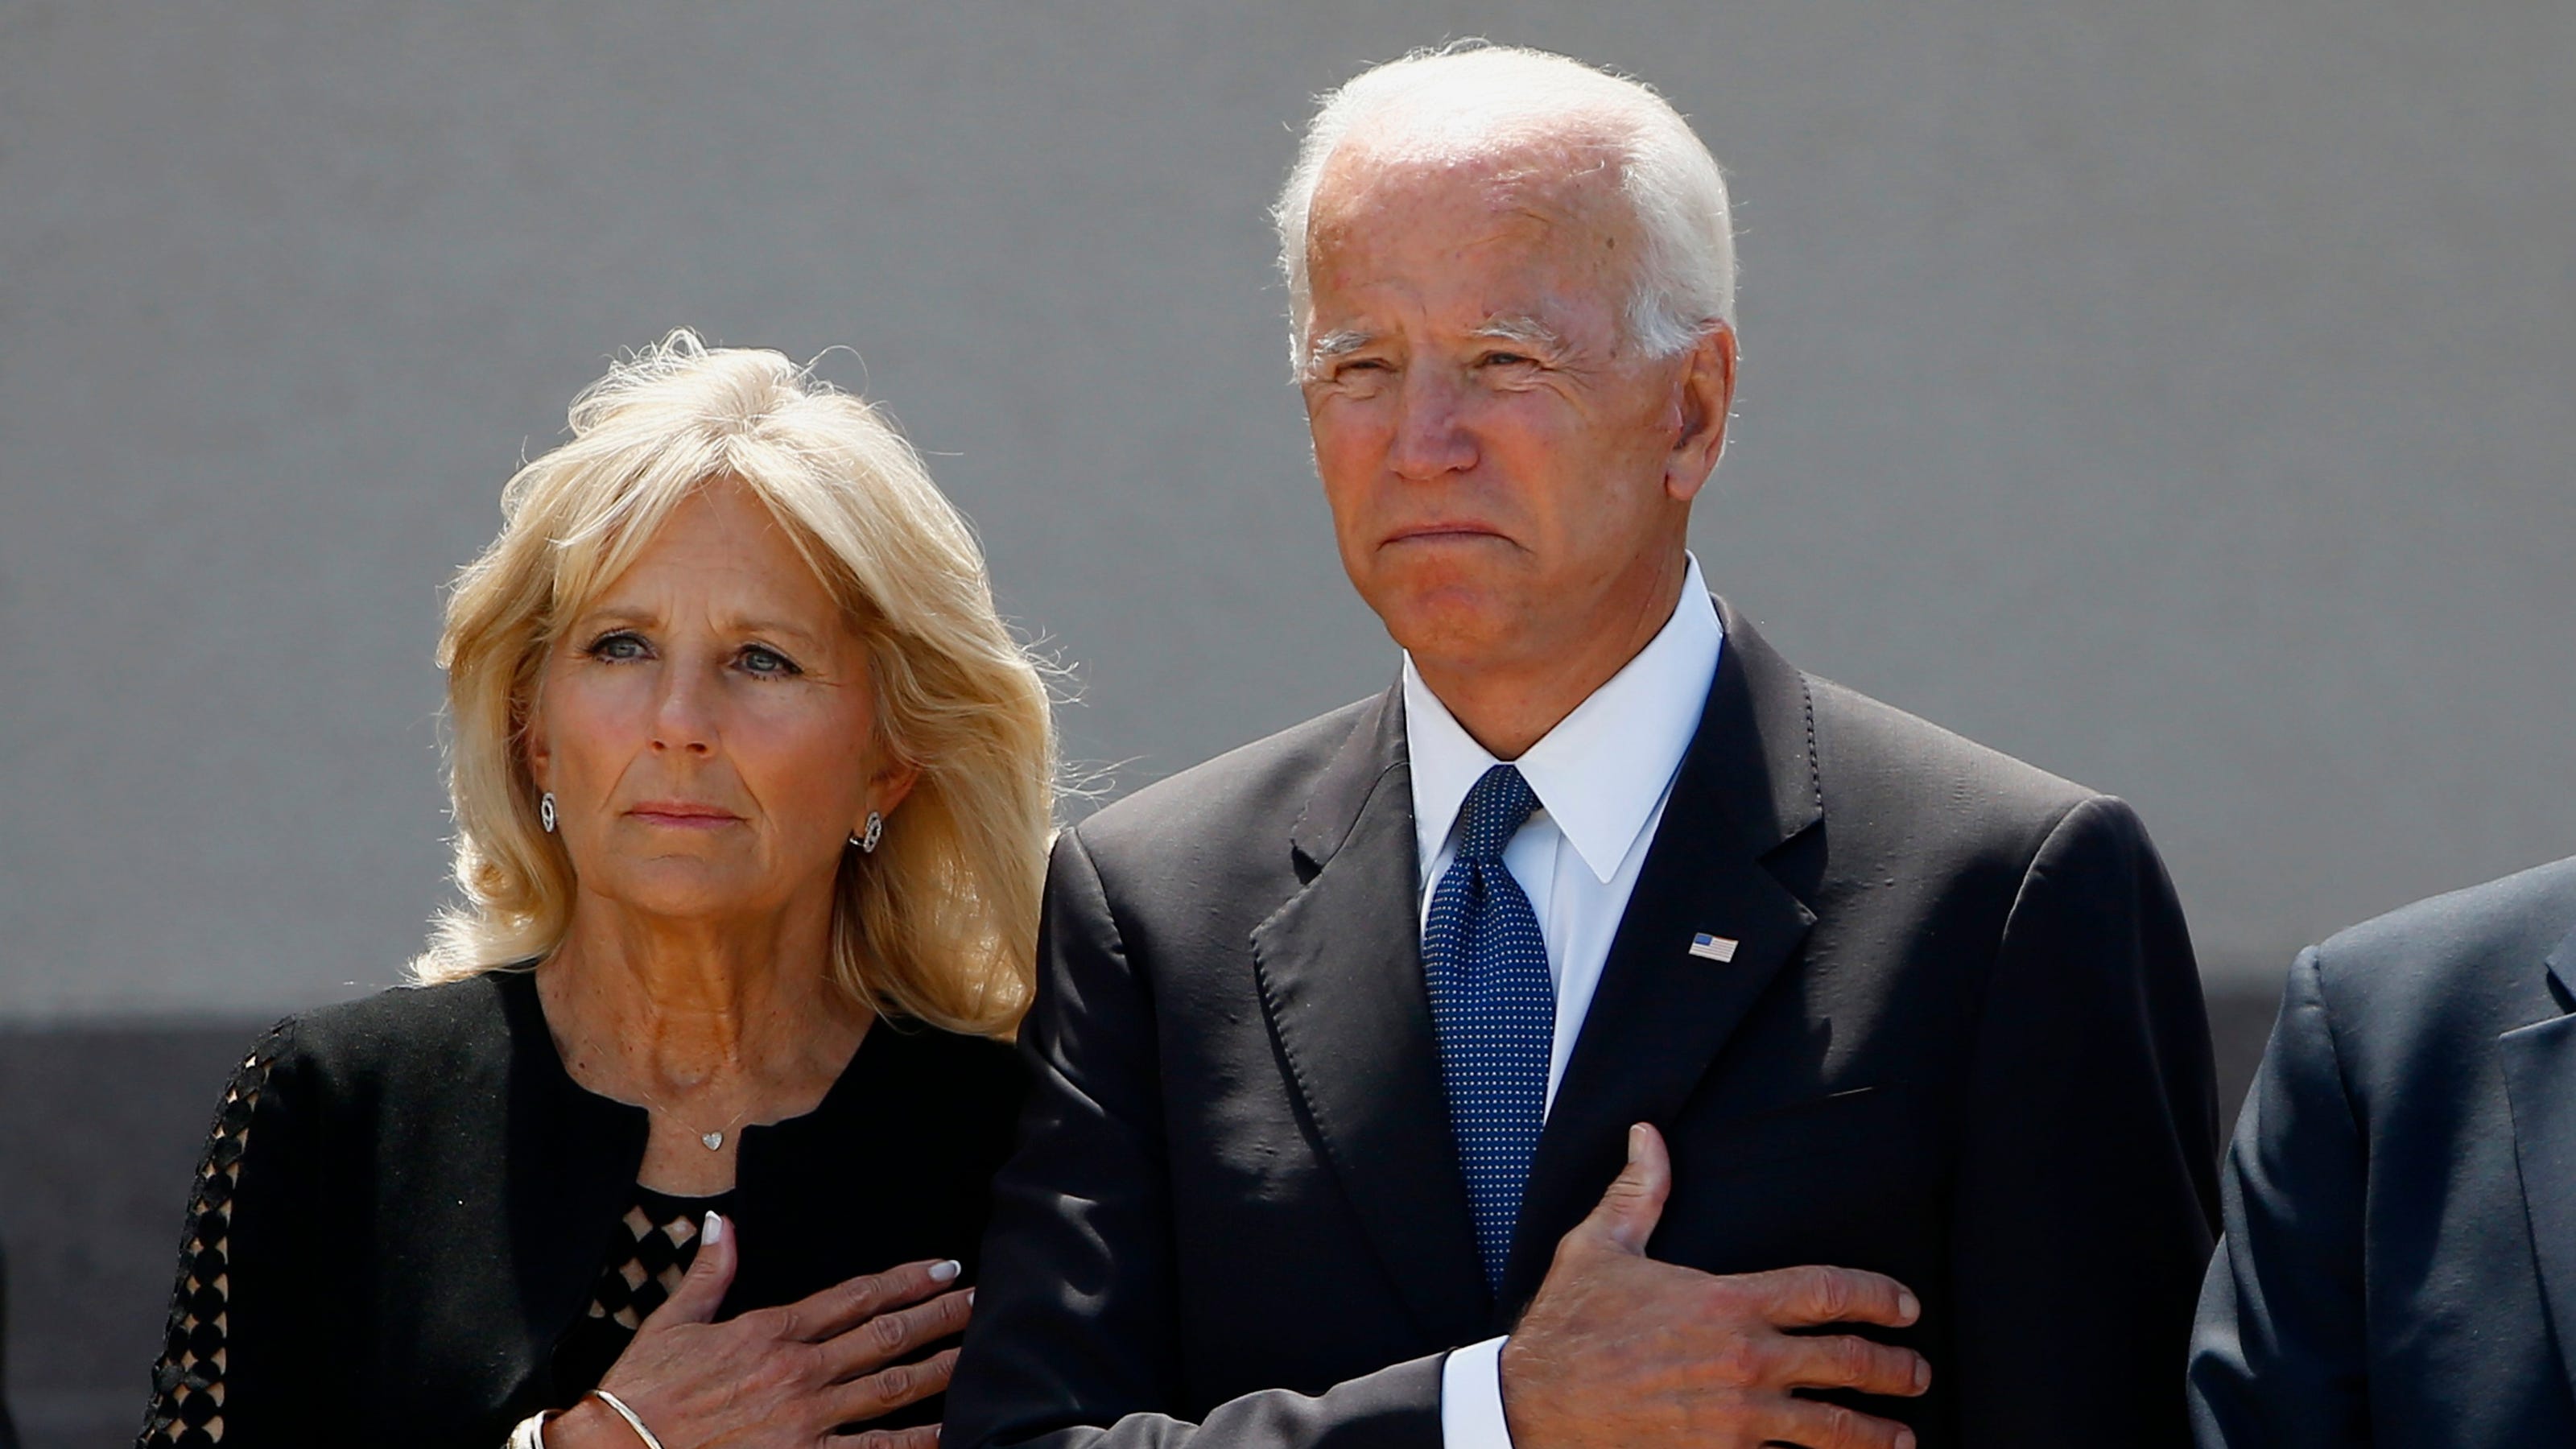 McCain funeral: Vice President Joe Biden gives eulogy